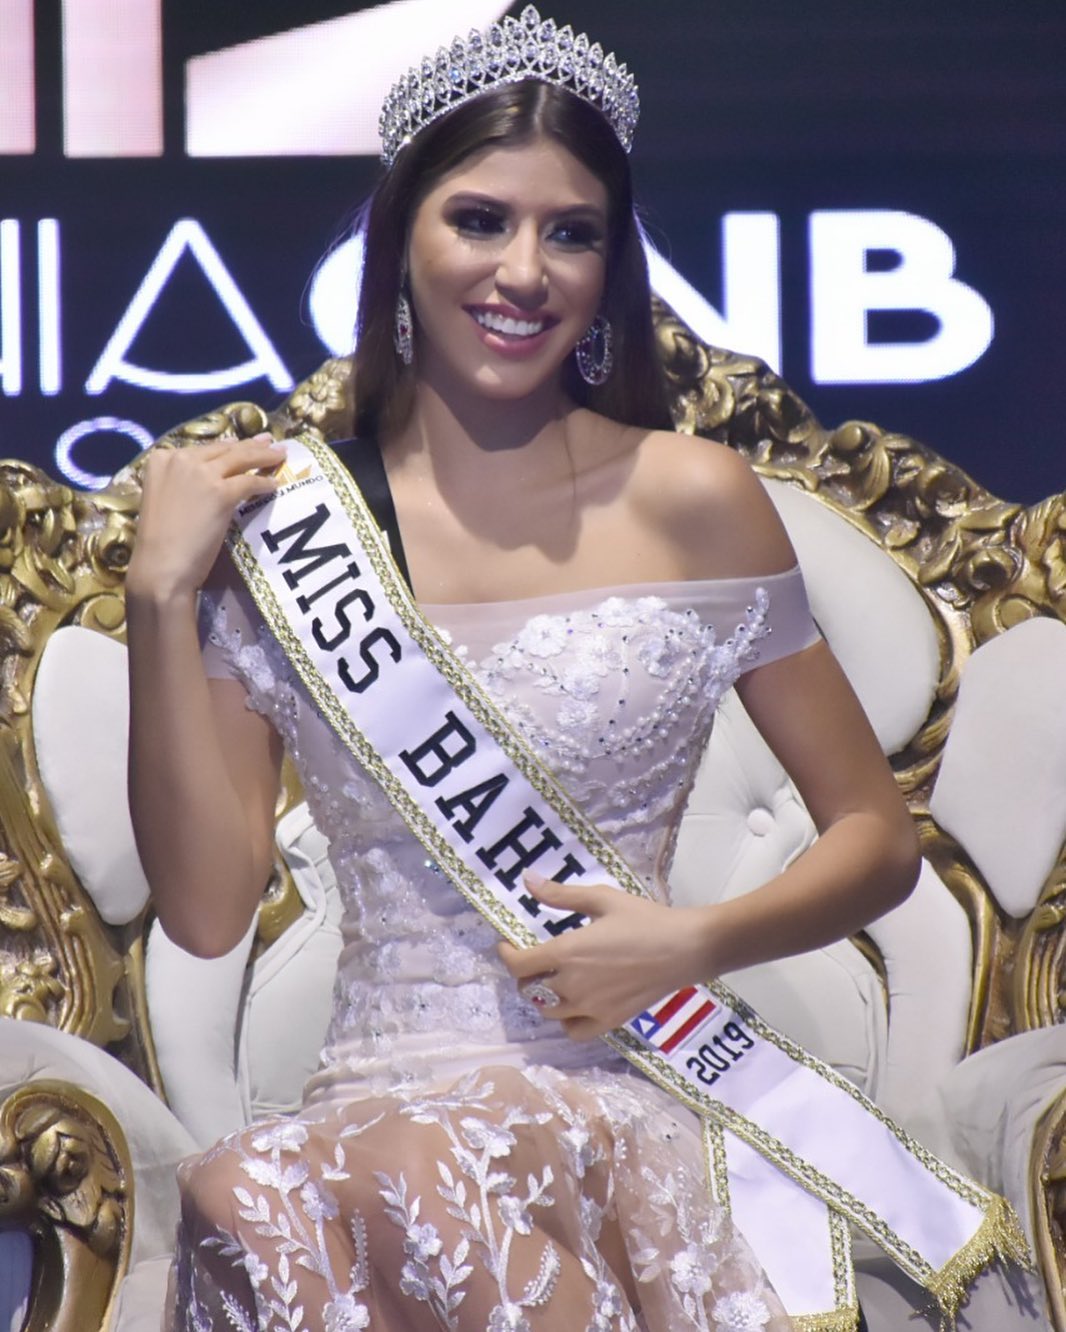 isabelle andrade, top 10 de miss brasil mundo 2019. 11793911